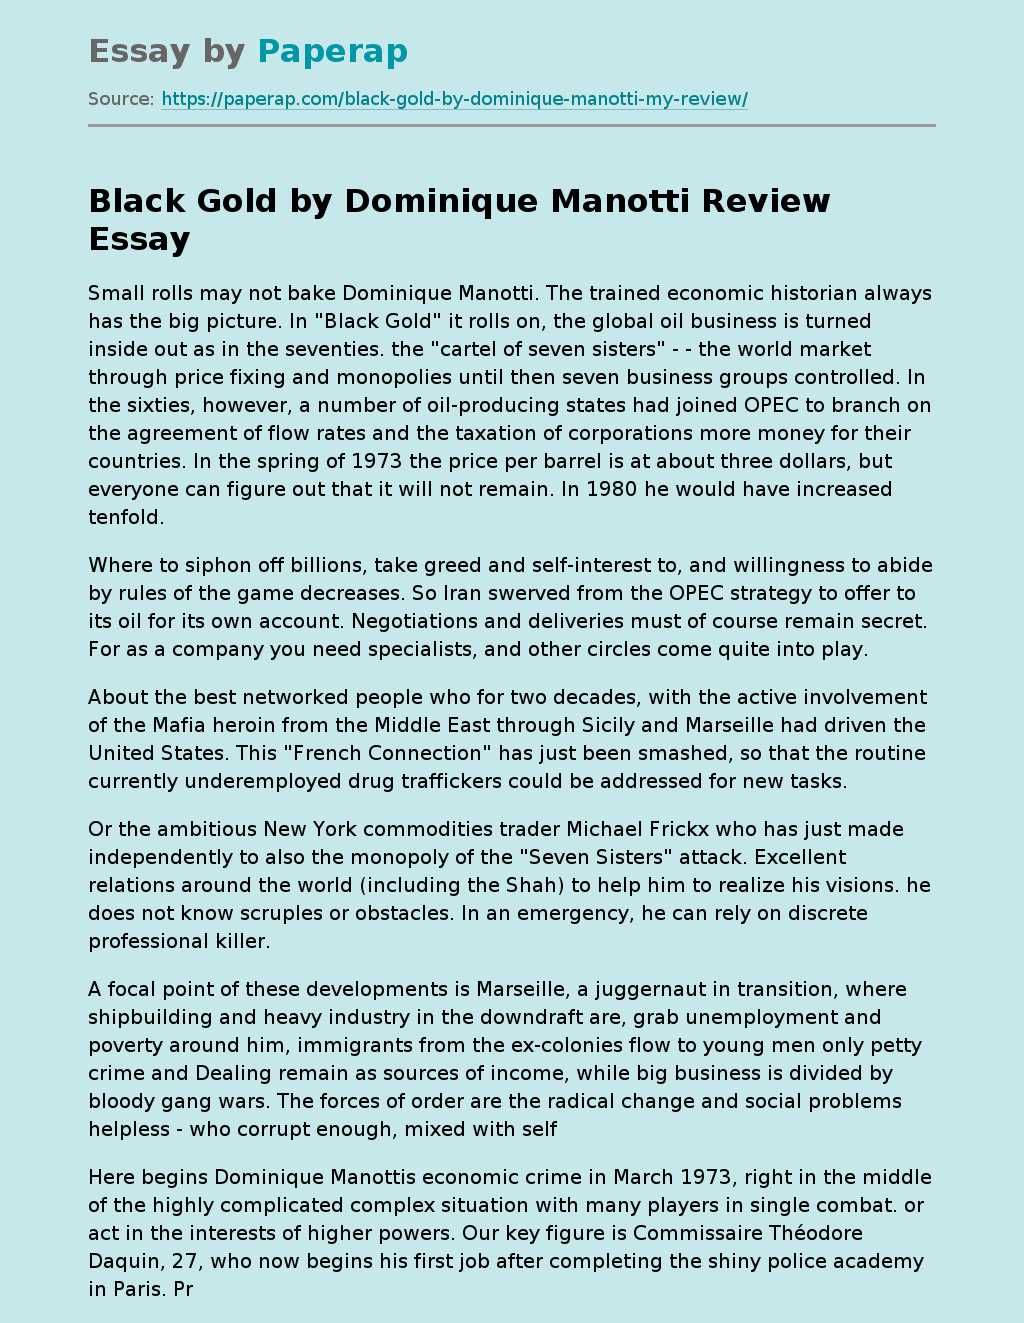 "Black Gold" by Dominique Manotti